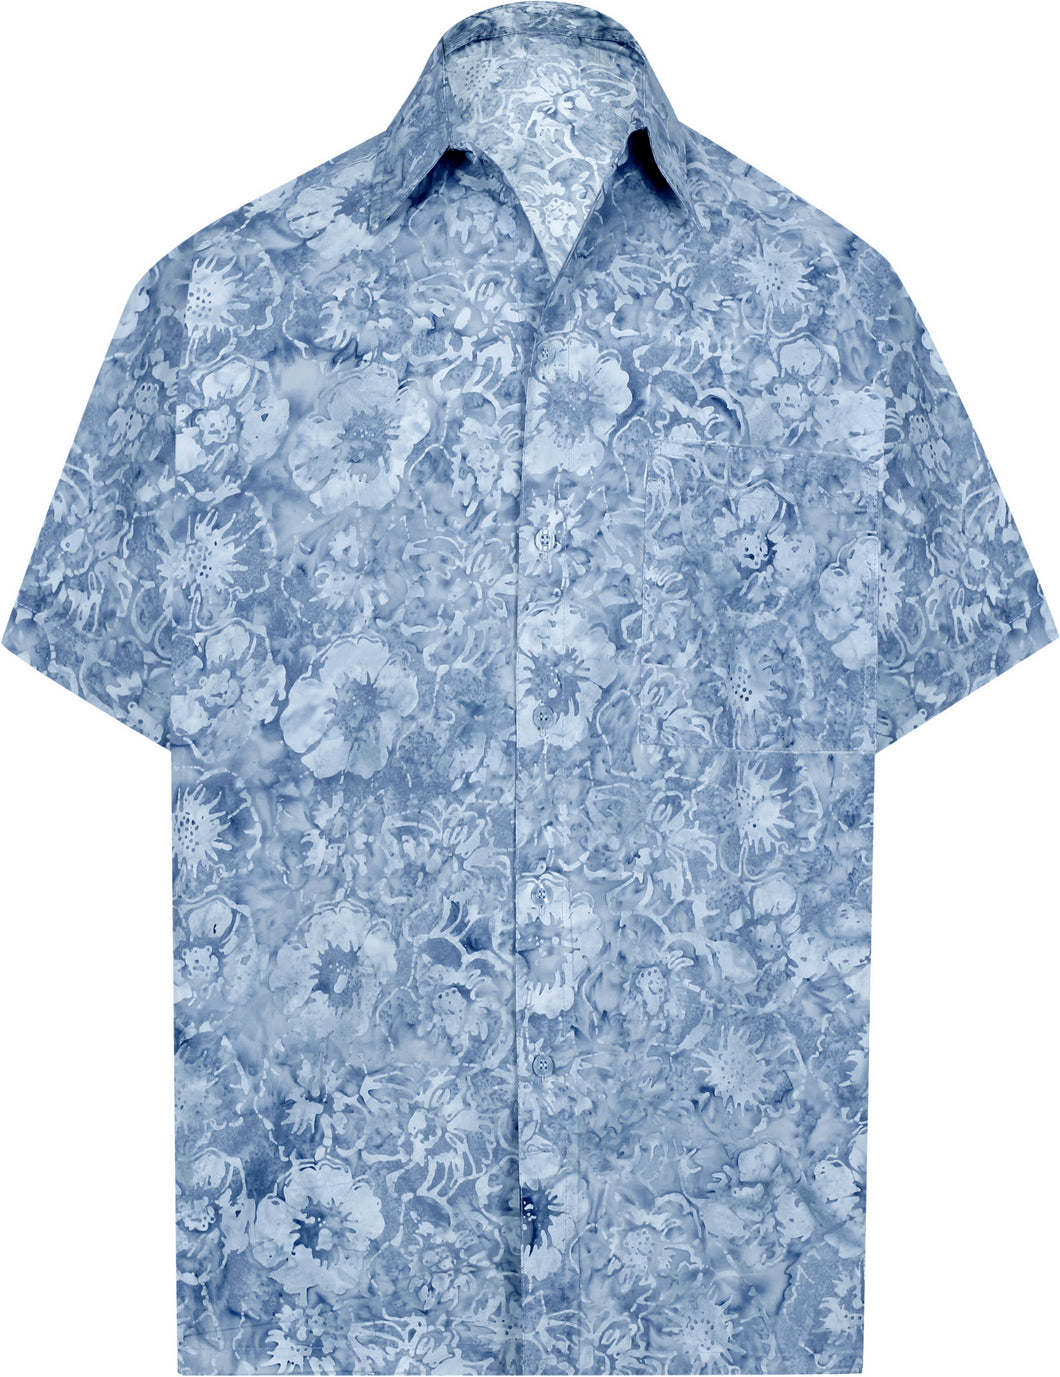 la-leela-men-casual-wear-cotton-hand-floral-printed-grey-hawaiian-shirt-size-s-xxl